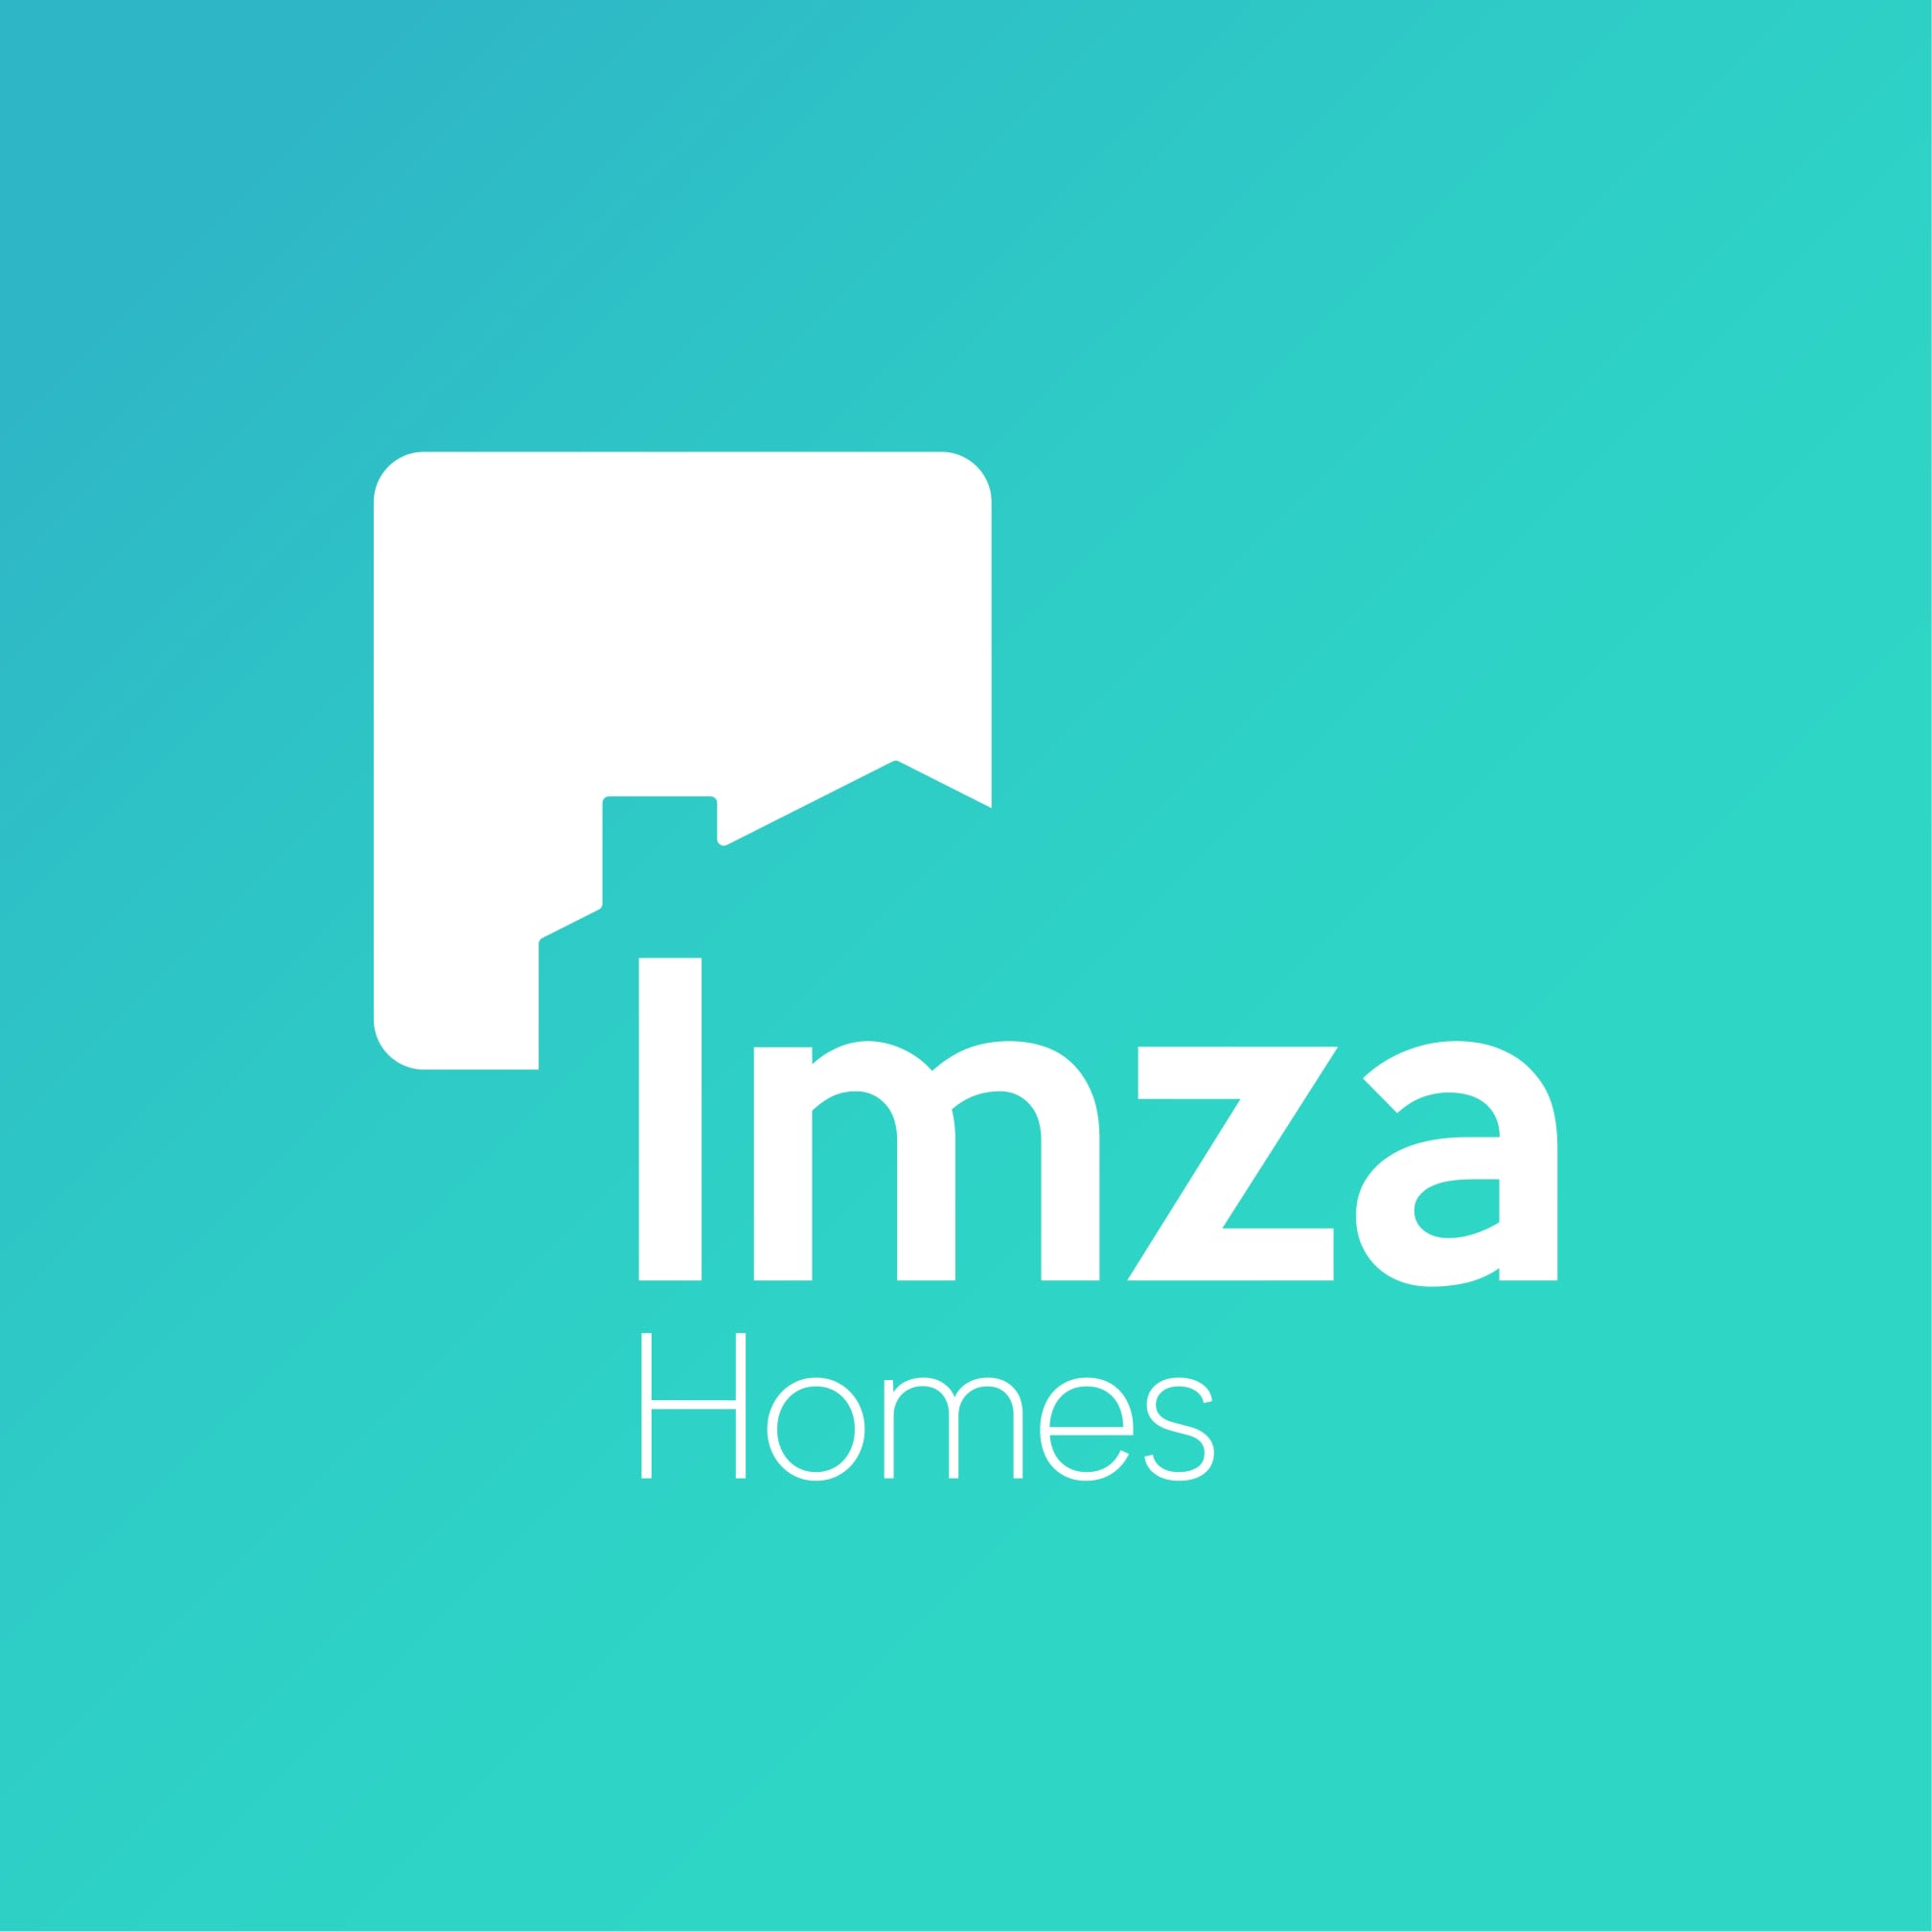 Images Imza Homes